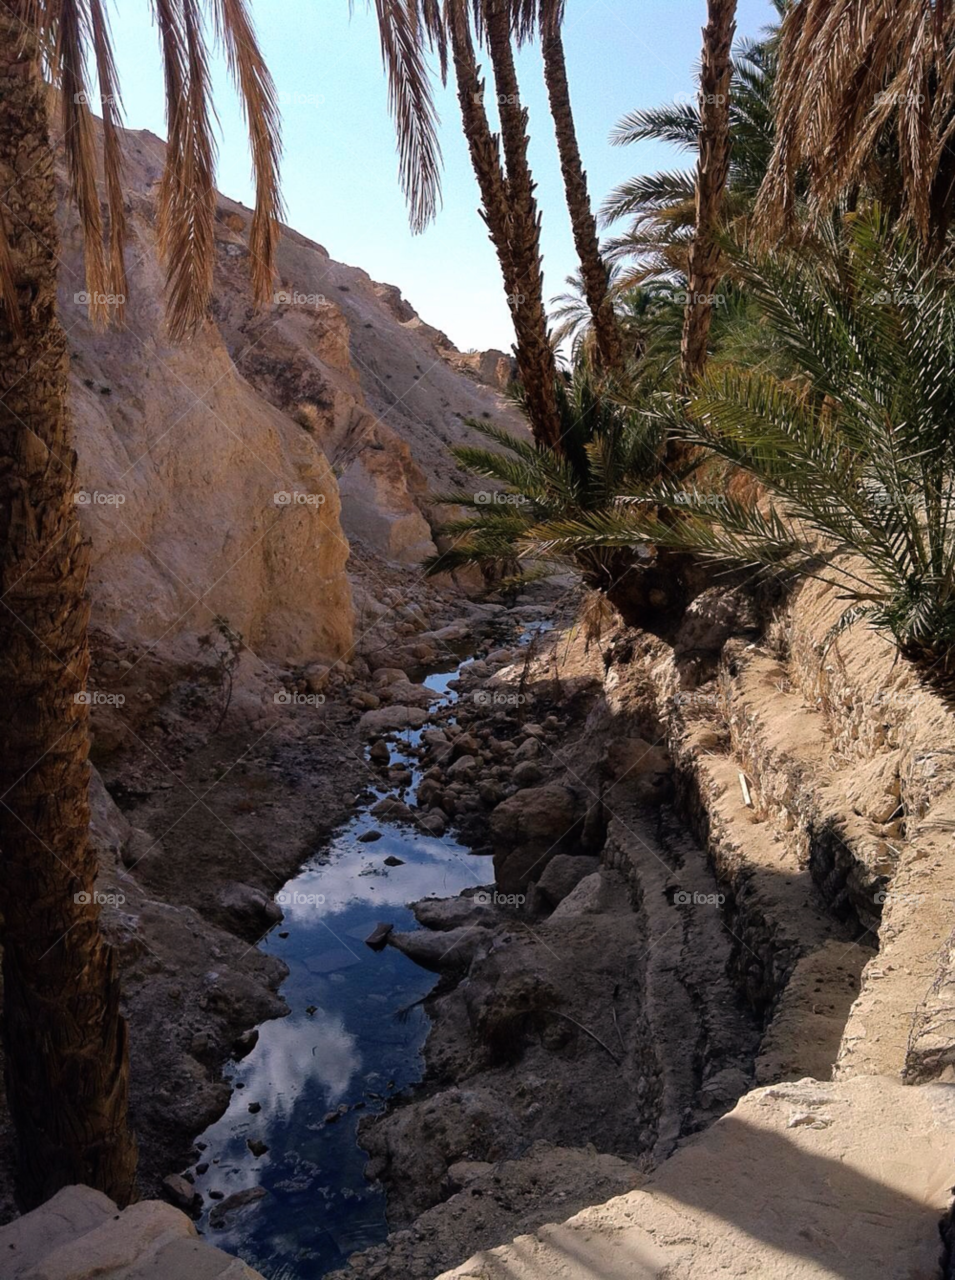 tunisia oasis vally by tazshah